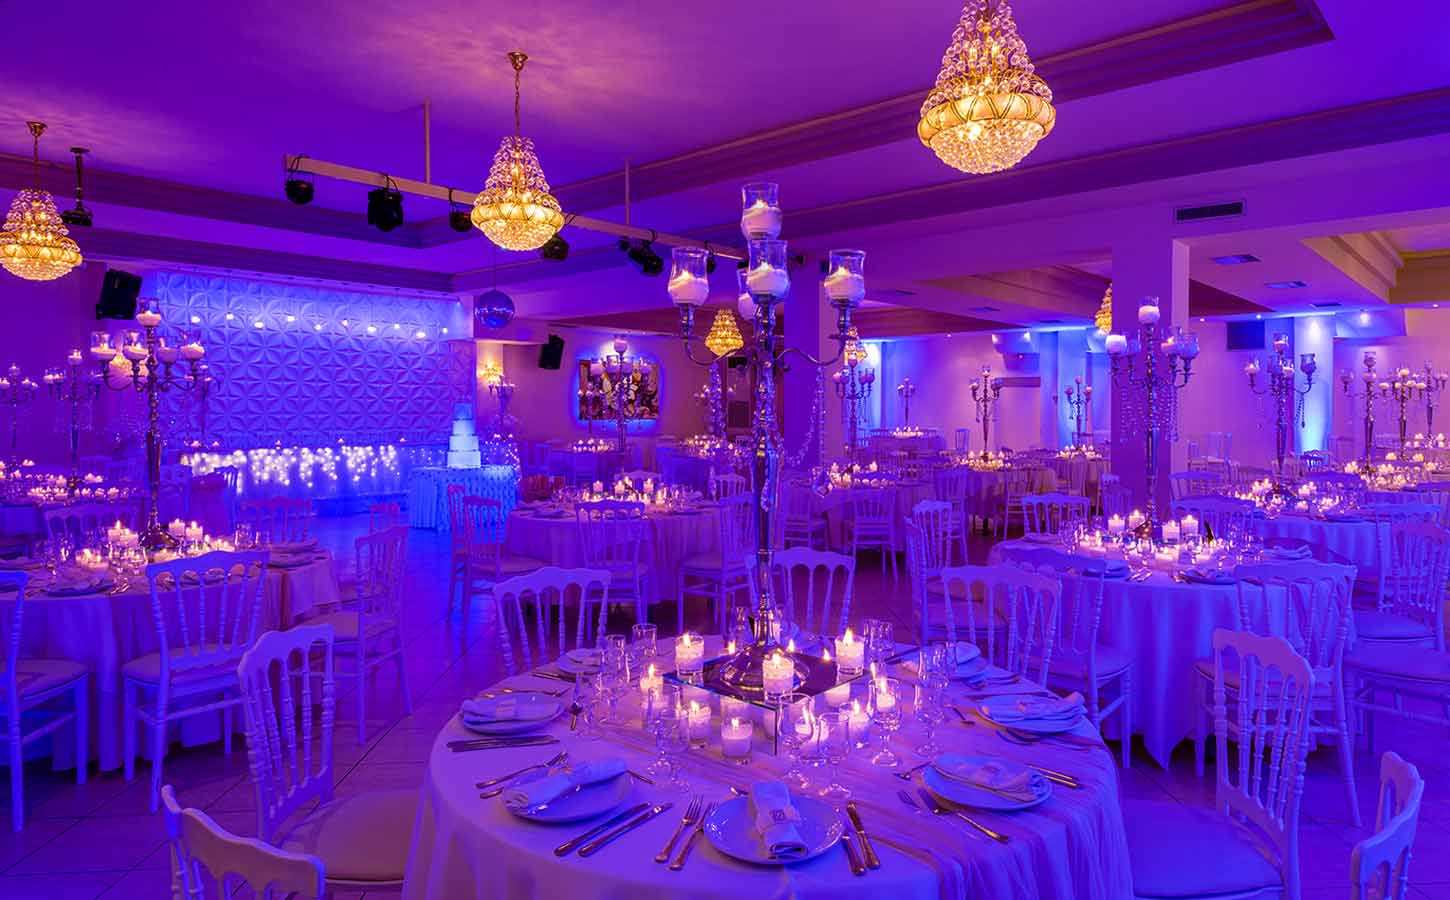 miriafiore-wedding-reception-vneue-decor-by-anna-maria-rogdaki--diamond-events-awarded